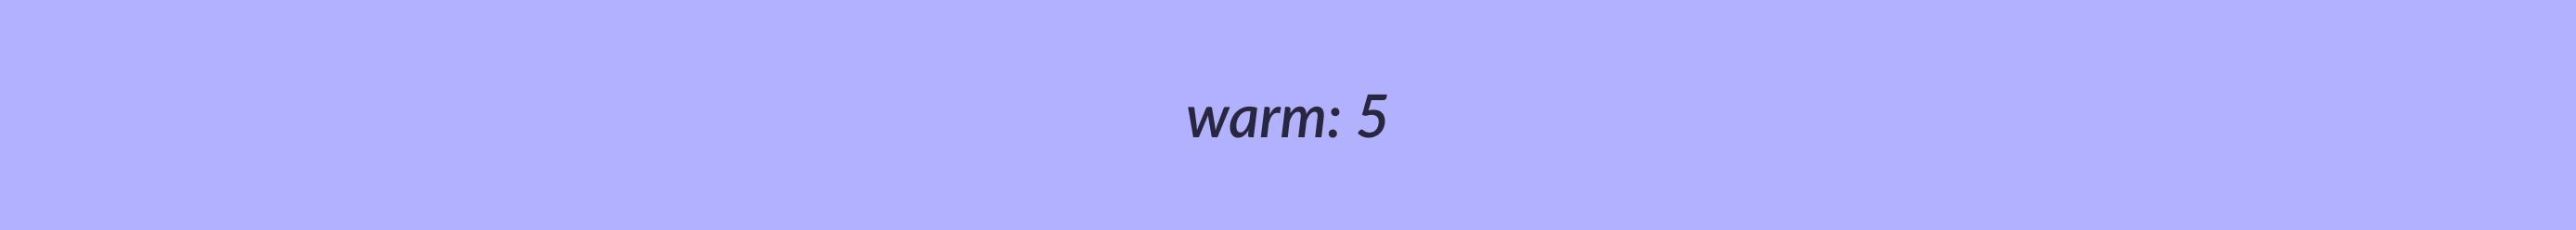 Warm value in Laravel Vapor